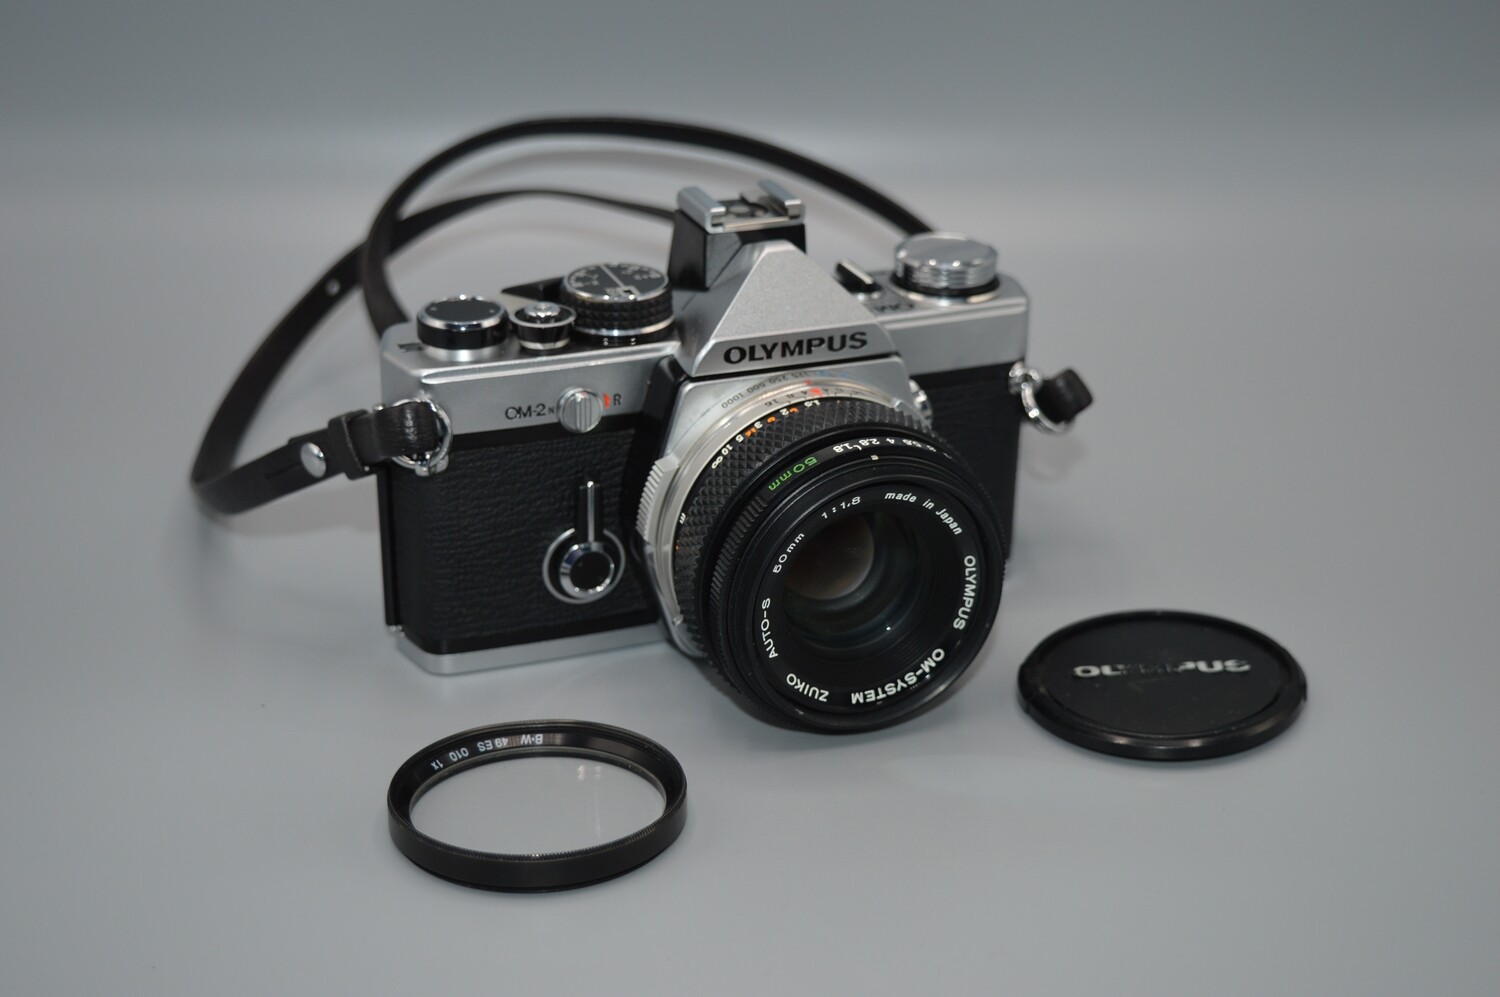 Olympus OM2 35mm SLR Film Camera with 1:1.8 50mm Lens